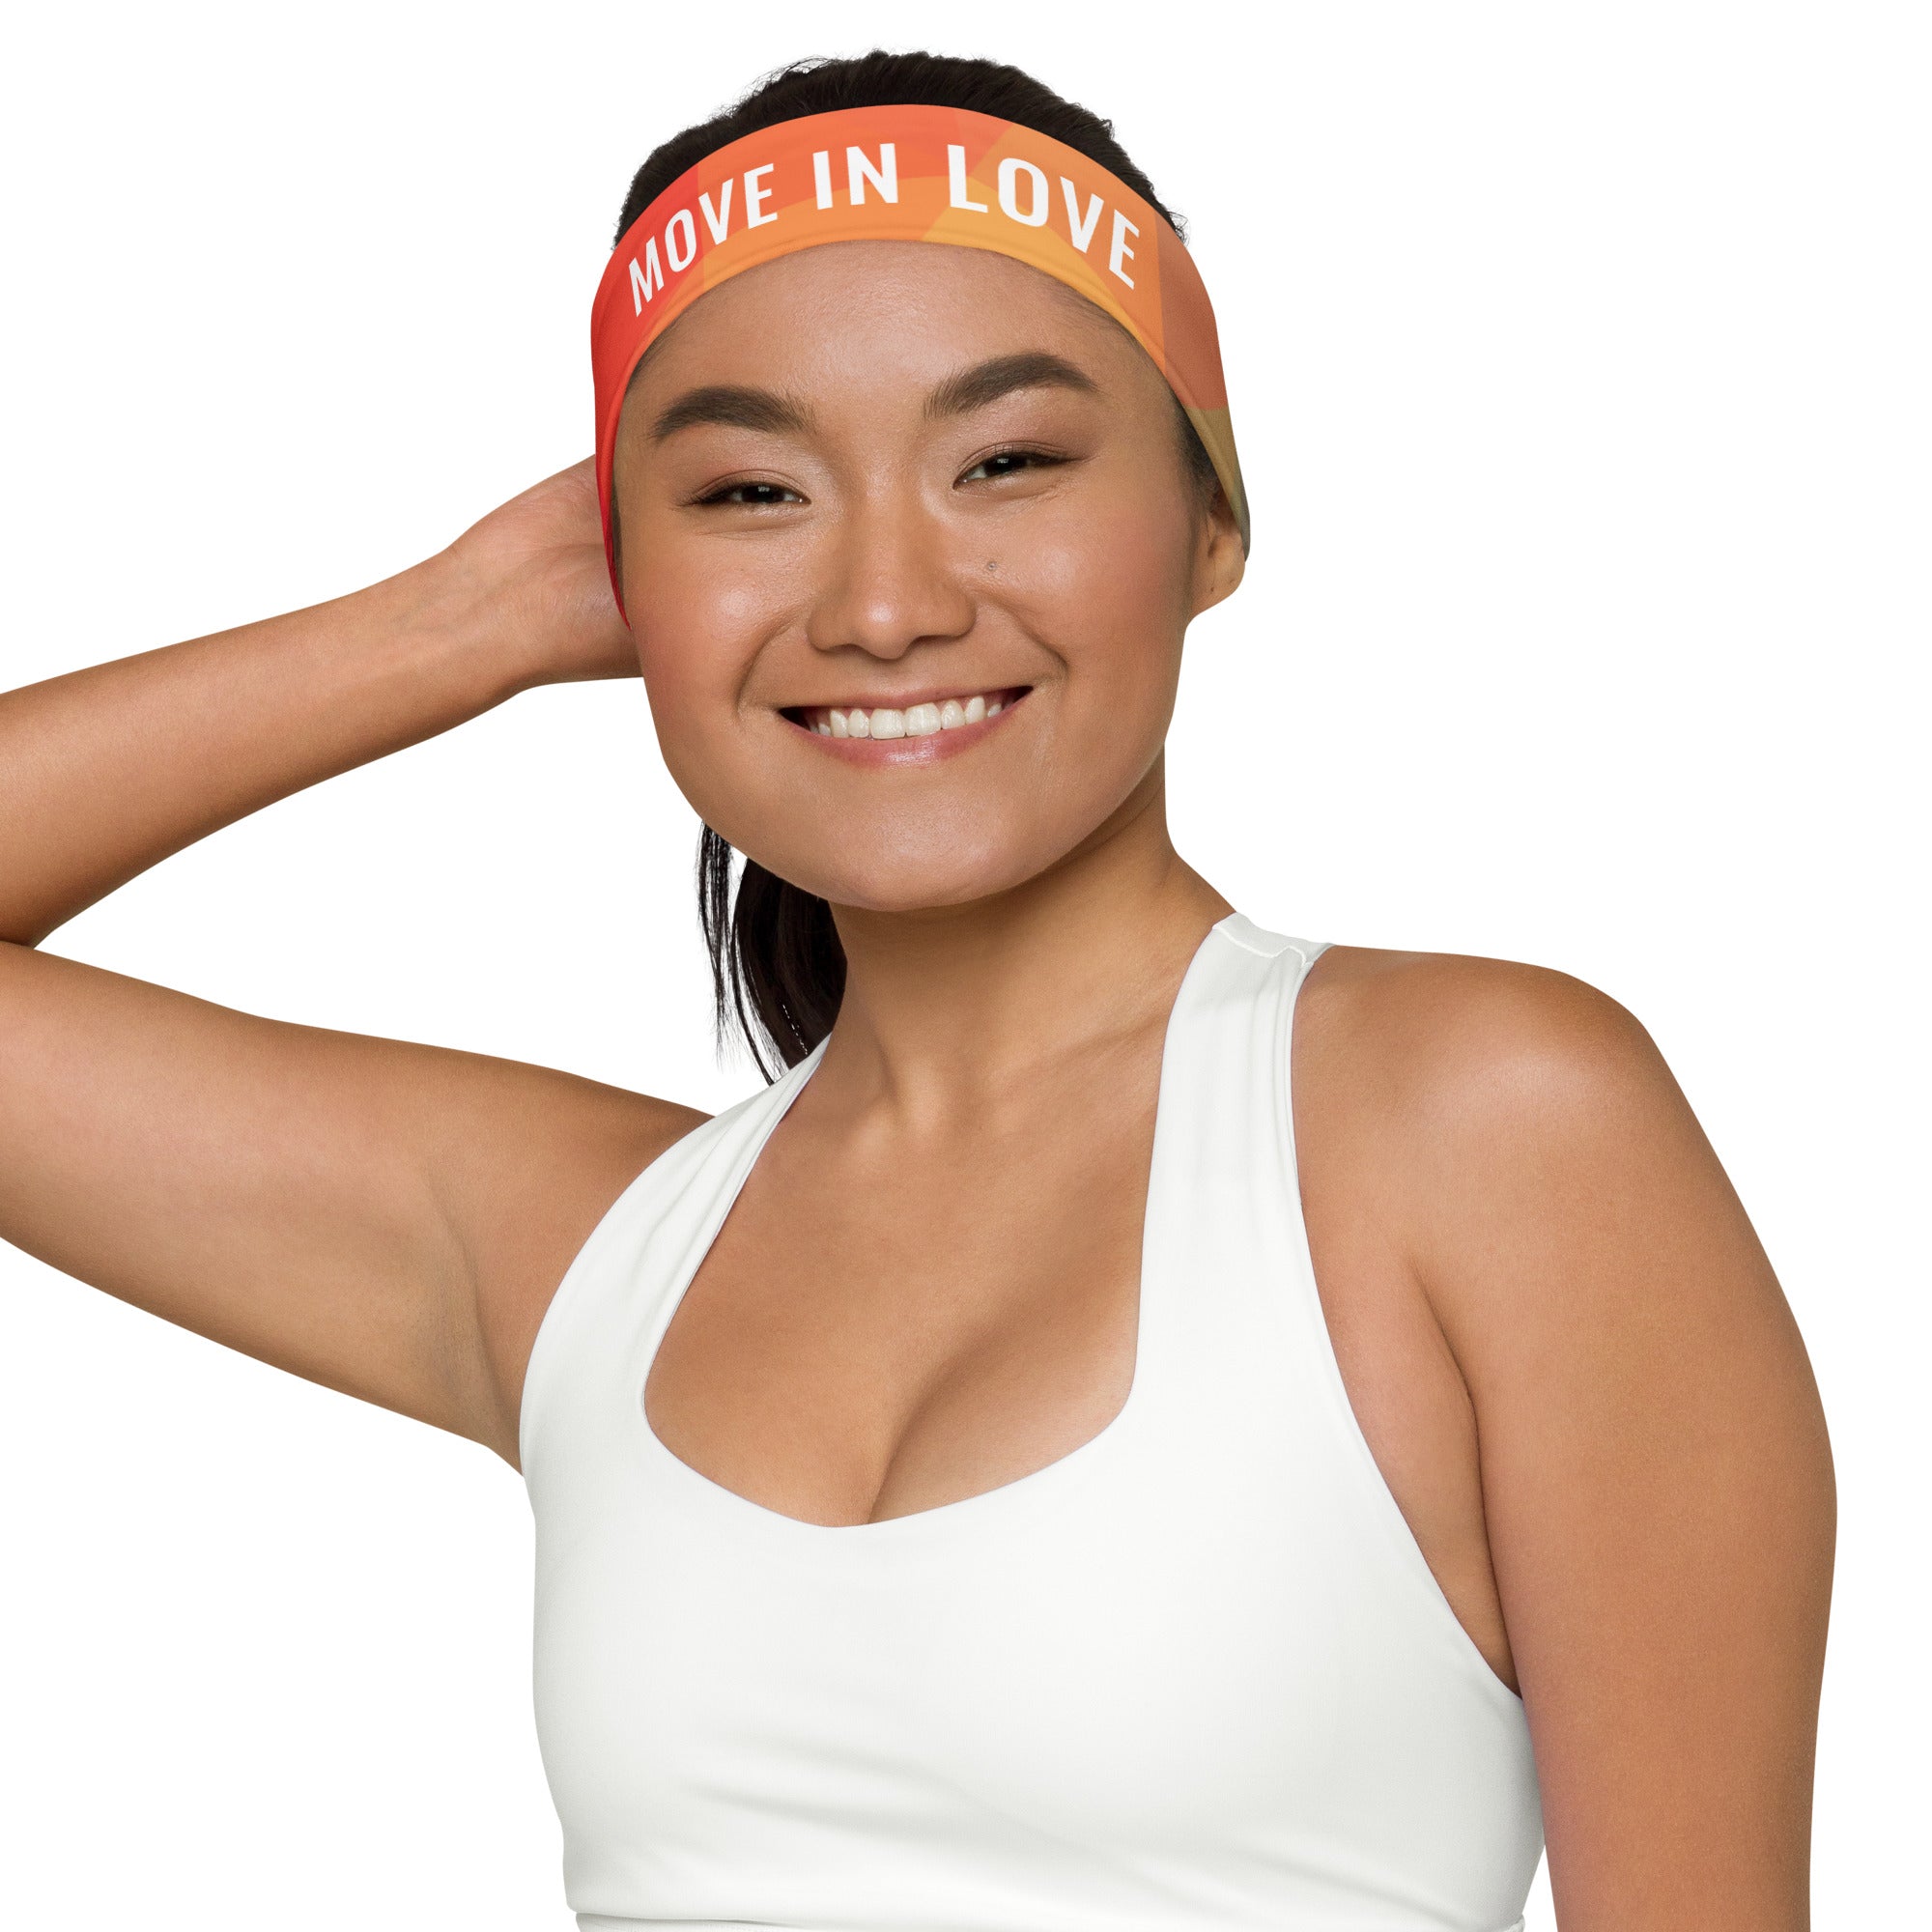 Move in Love Headband